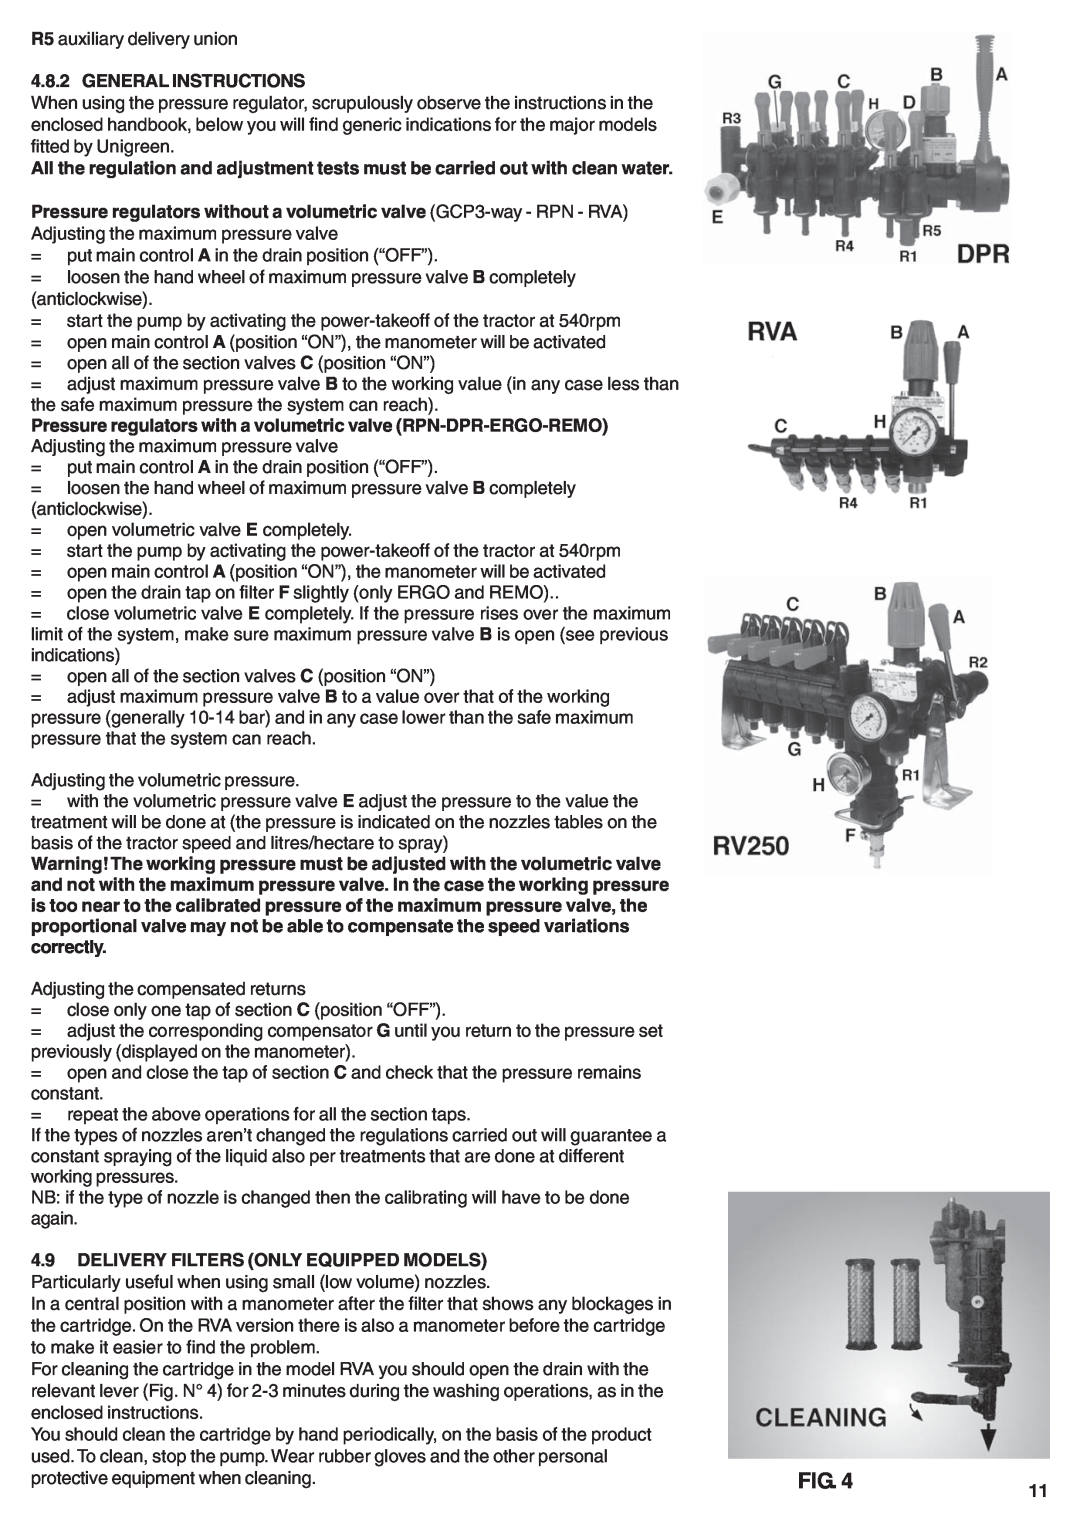 Unigreen 20, 50, 40, 55 manual General Instructions, Pressure regulators without a volumetric valve GCP3-way - RPN - RVA 